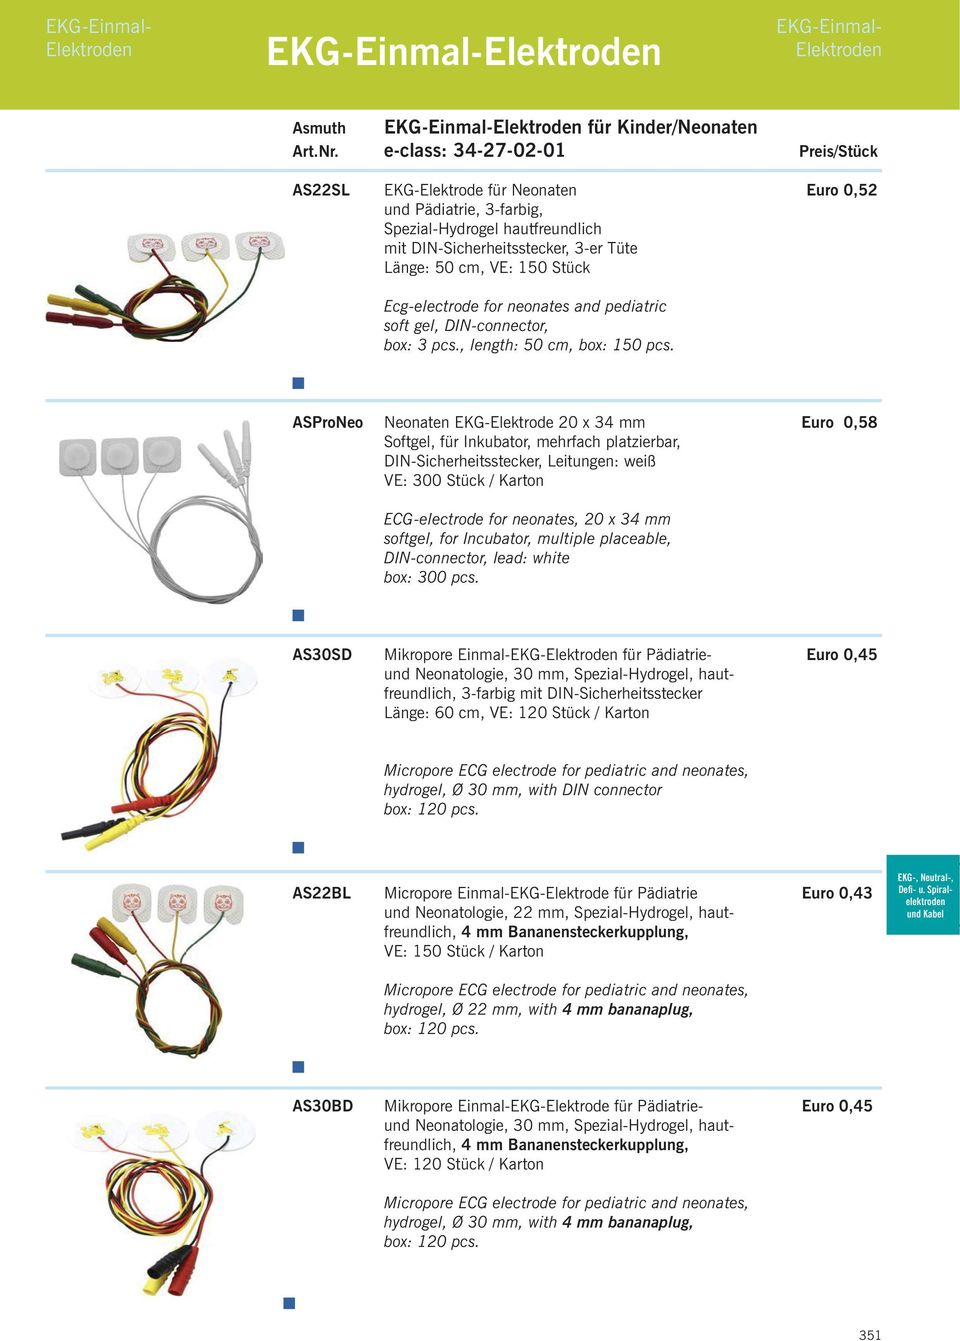 Ecg-electrode for neonates and pediatric soft gel, DIN-connector, box: 3 pcs., length: 50 cm, box: 150 pcs.